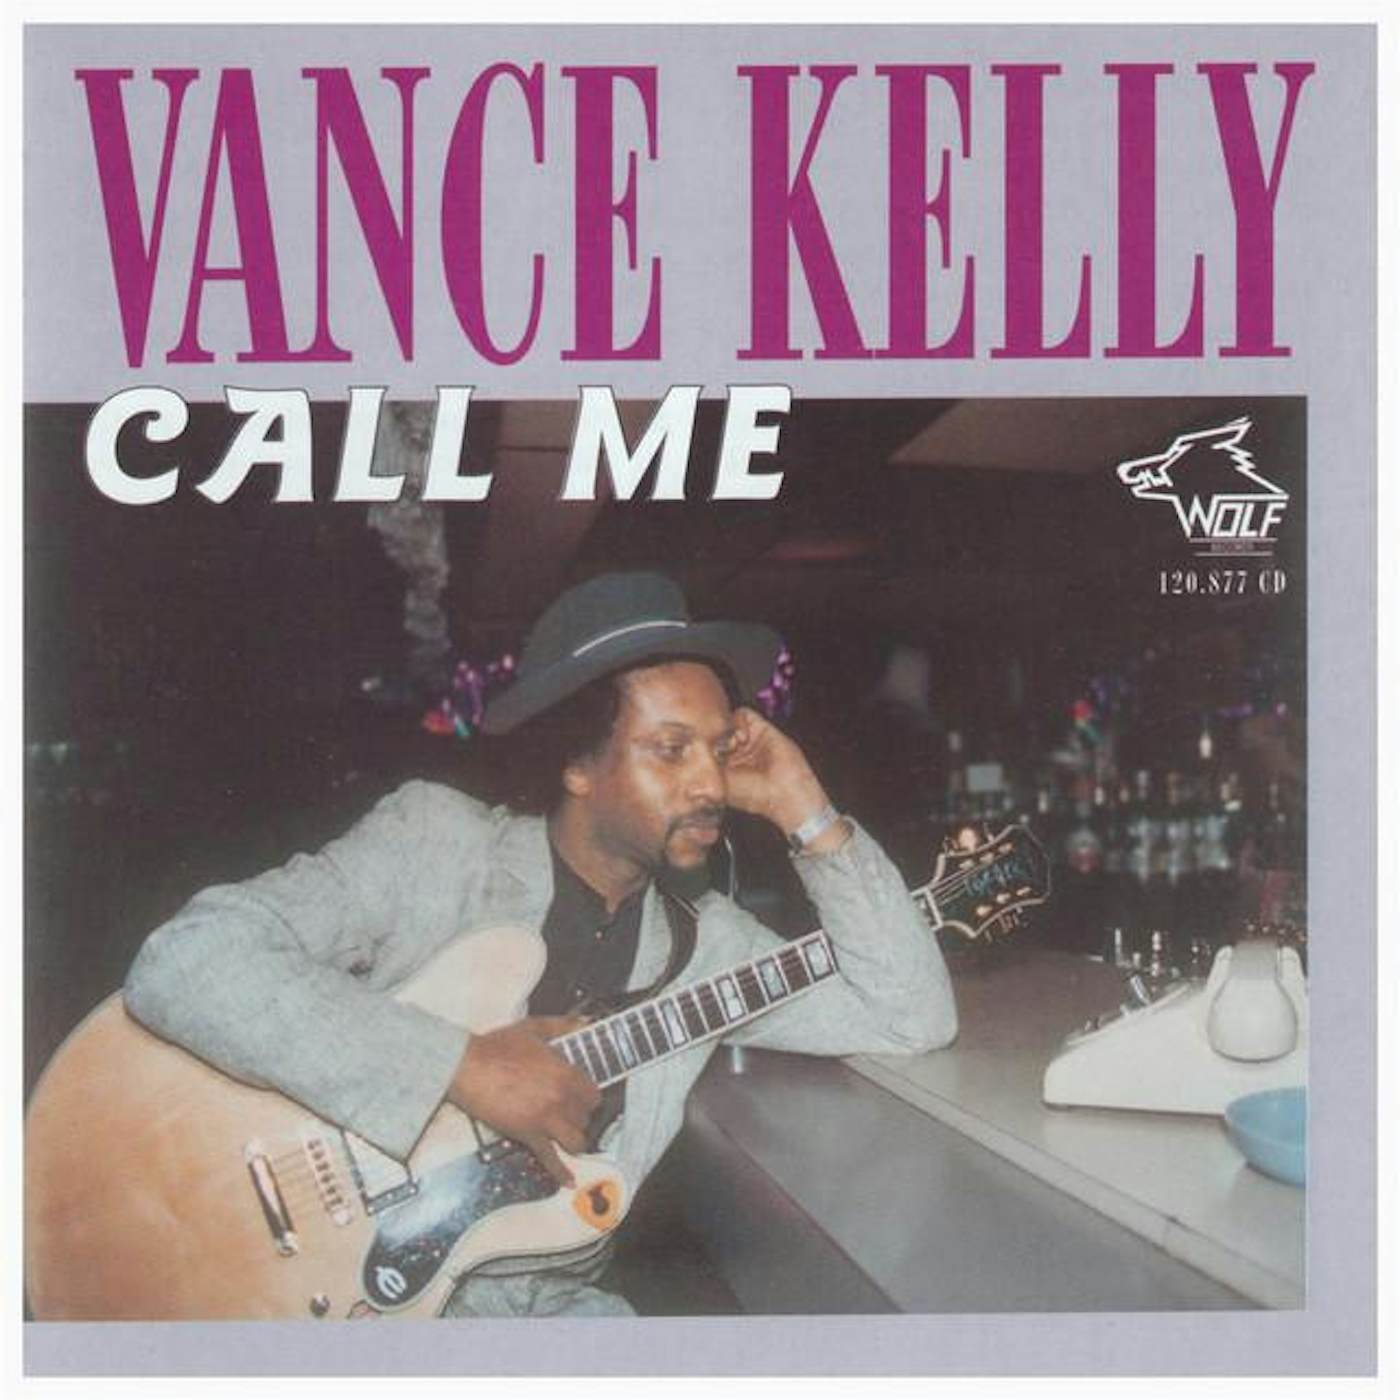 Vance Kelly